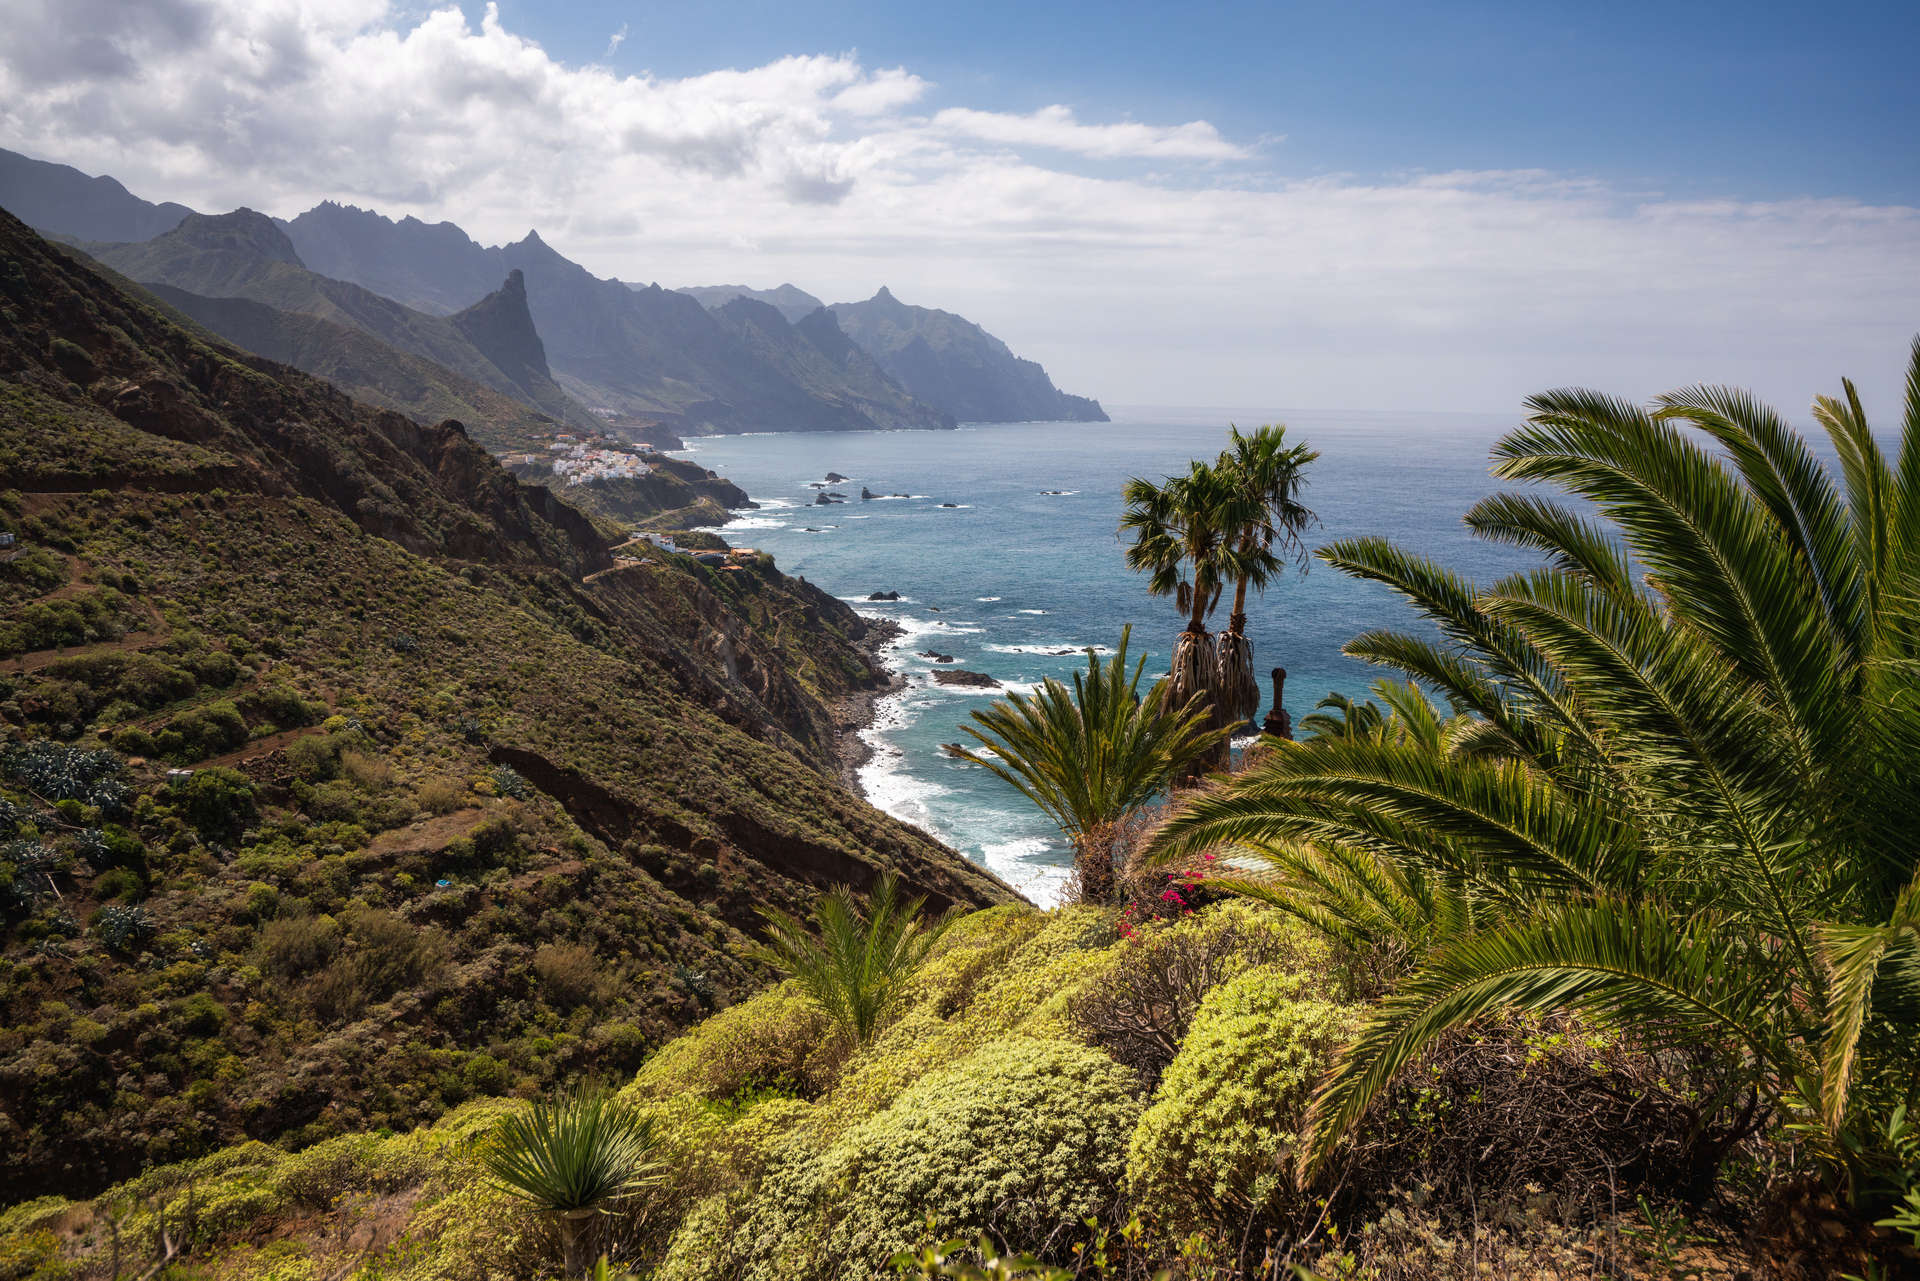 The coastline of Northern Tenerife